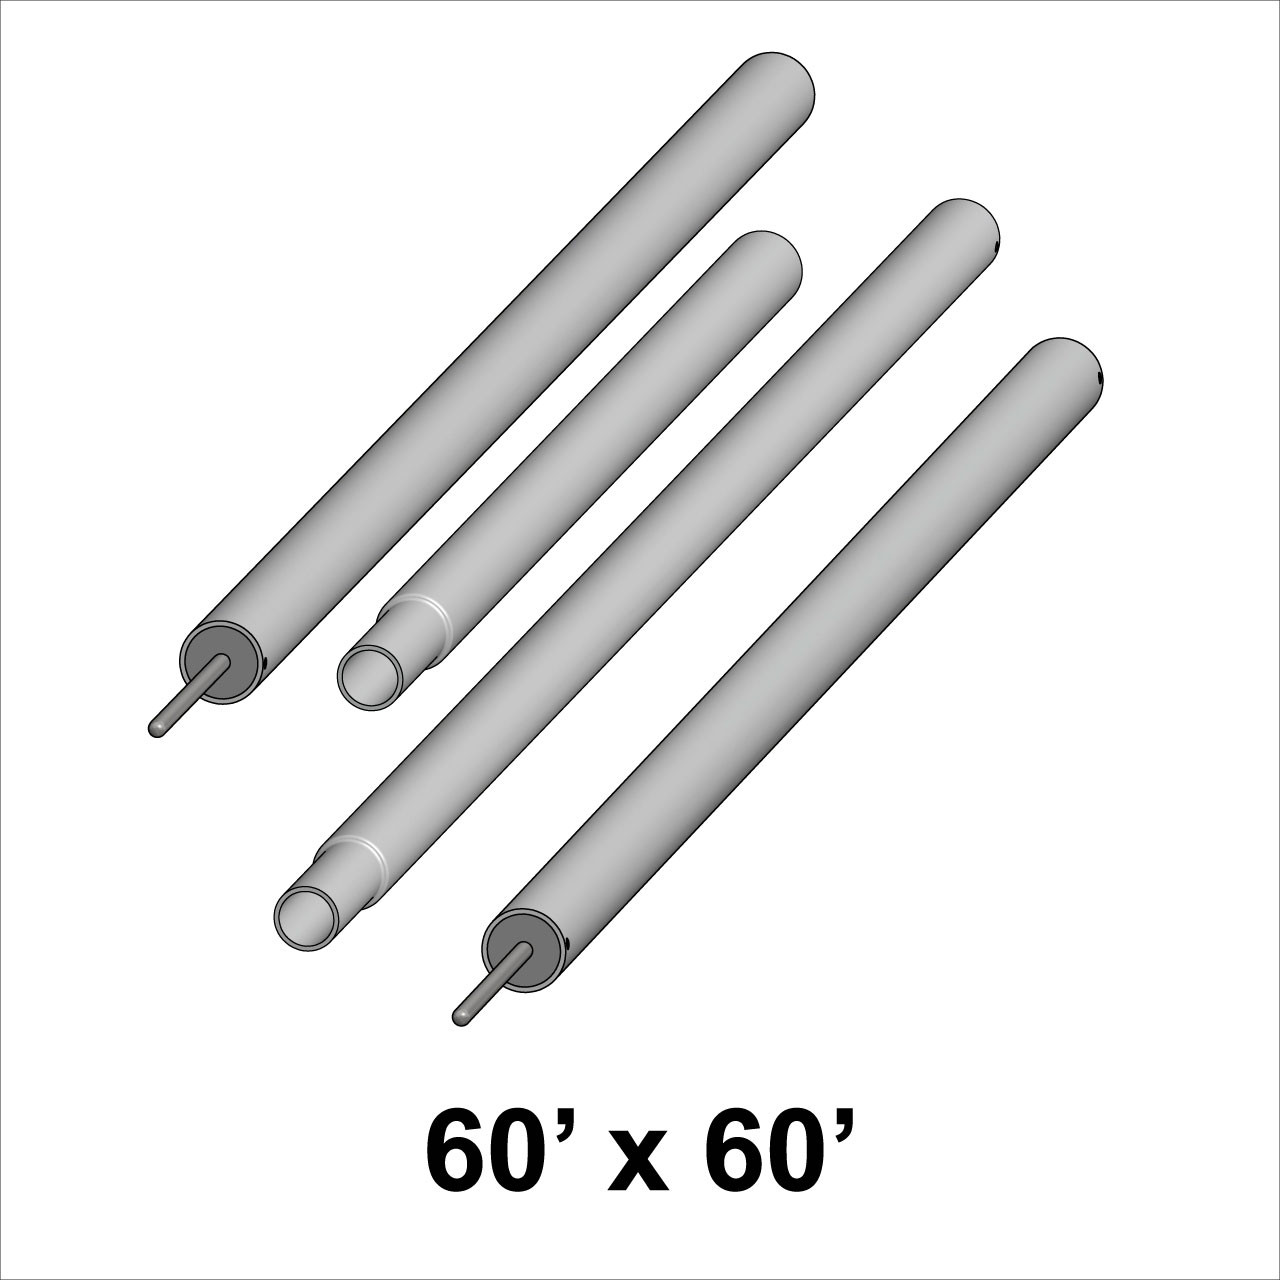 60' x 60' Classic Series Pole Kit